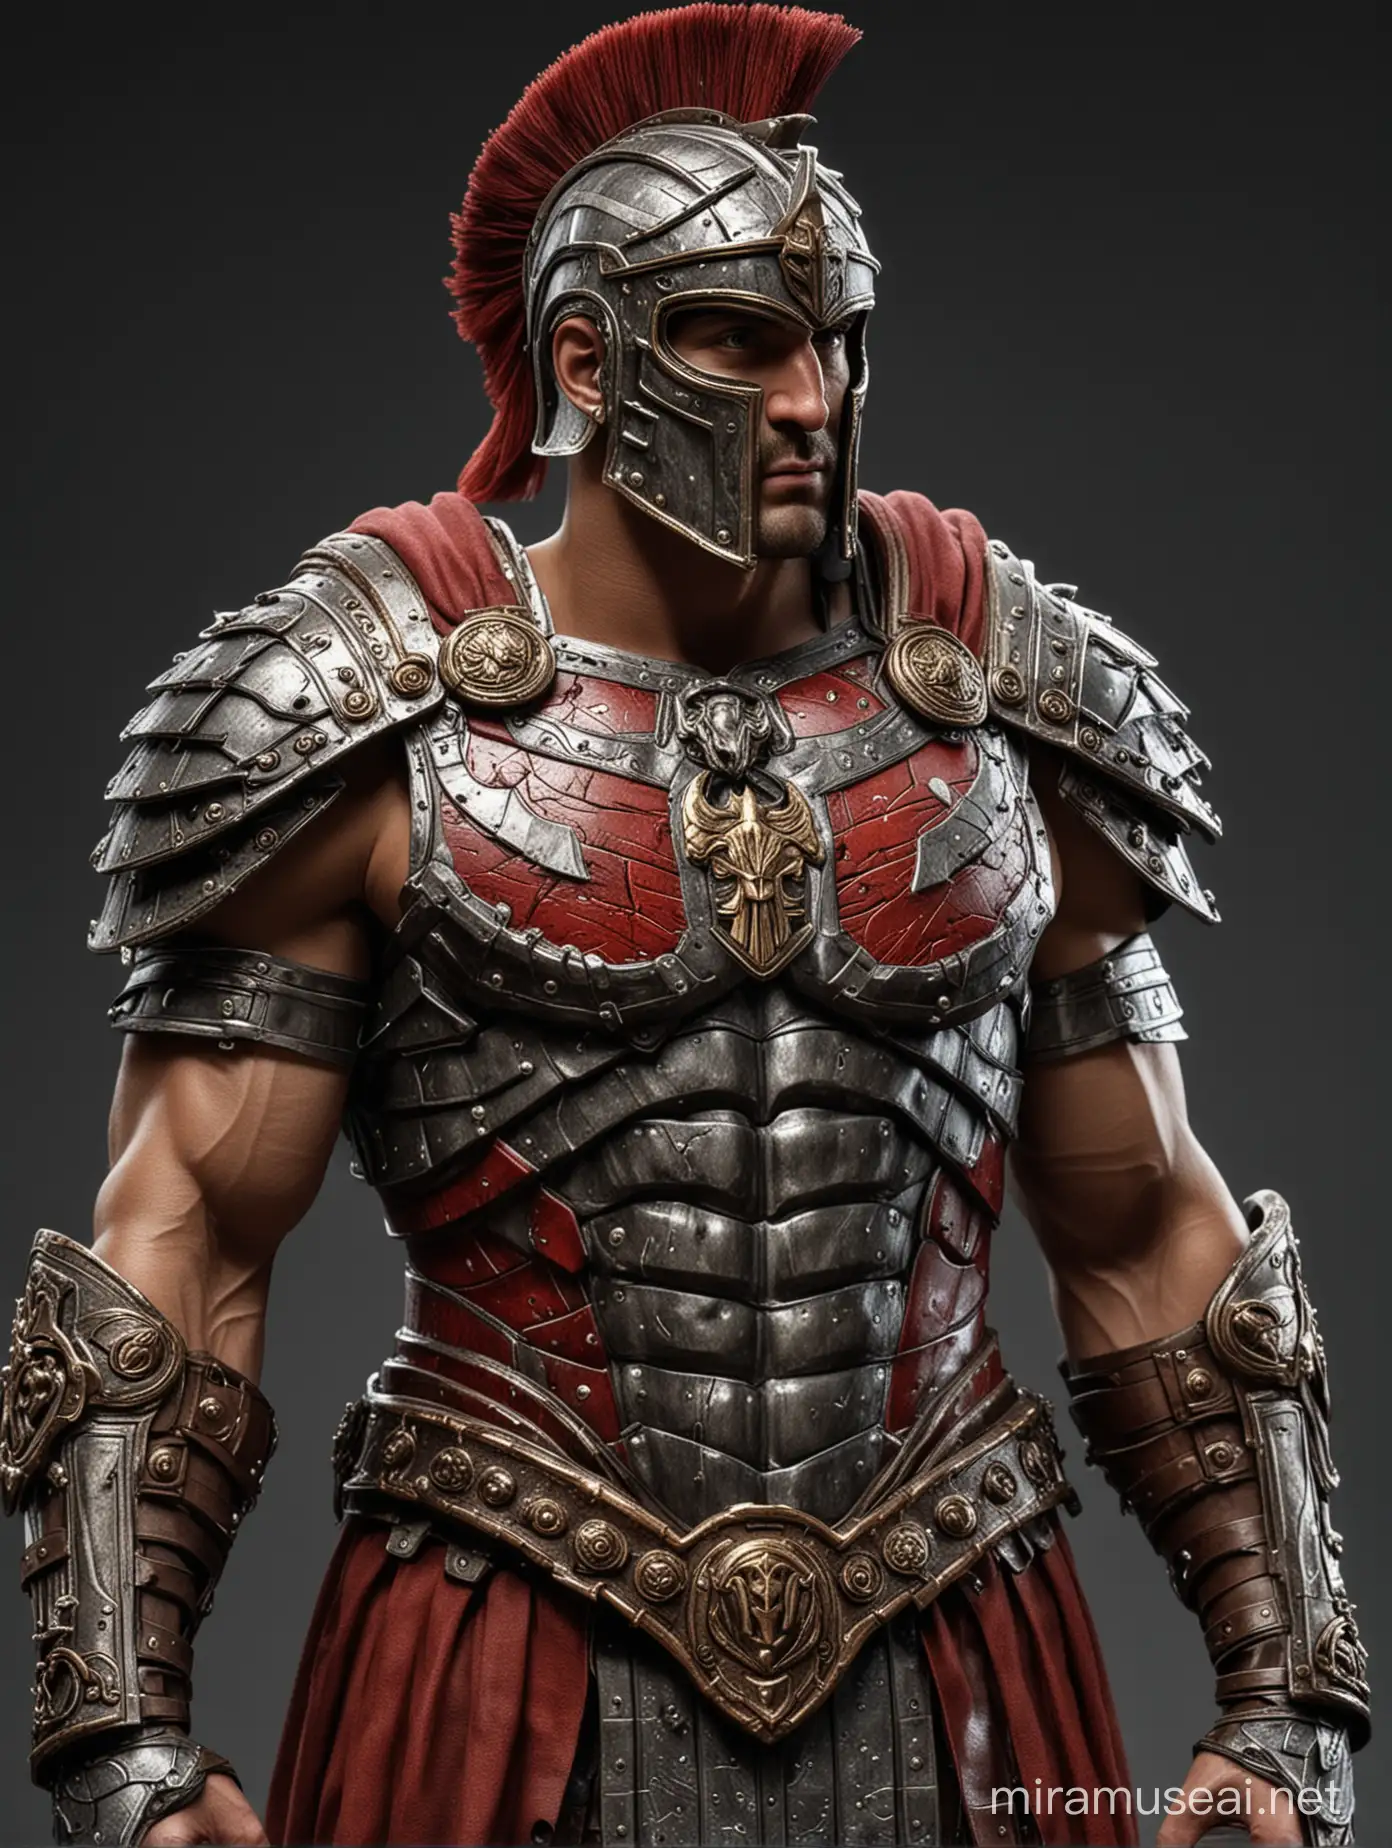 Epic Superhero Roman Centurion HyperDetailed Armor Adventure